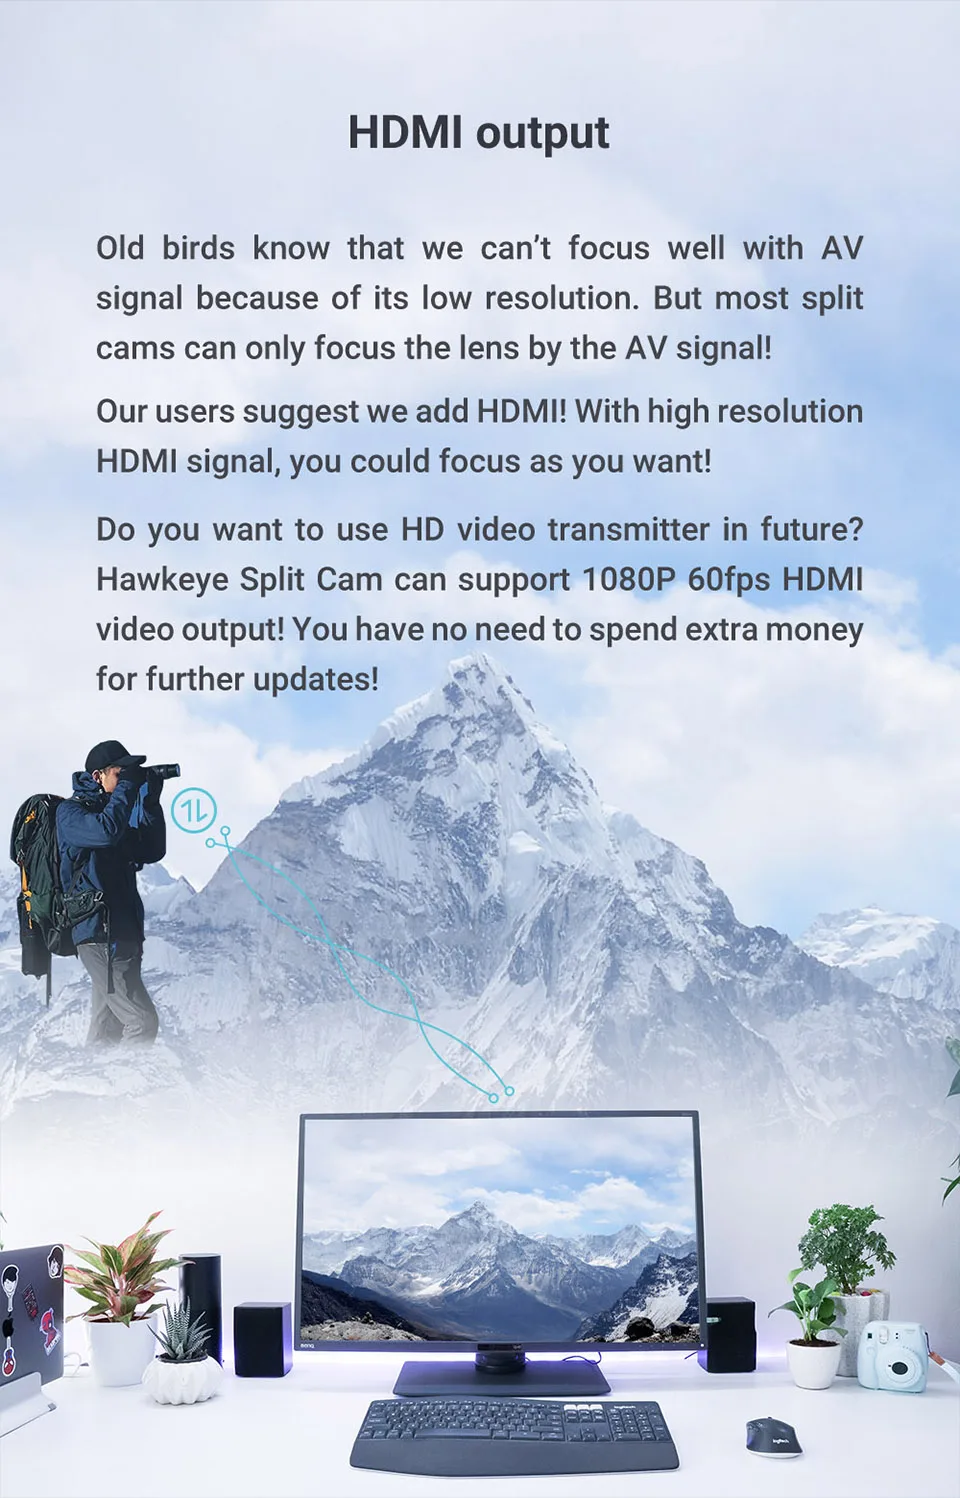 Hawkeye Светлячок Сплит FPV камера 4K 160 градусов HD Запись DVR WDR одноплатный Встроенный микрофон низкая задержка ТВ для RC FPV Дрон